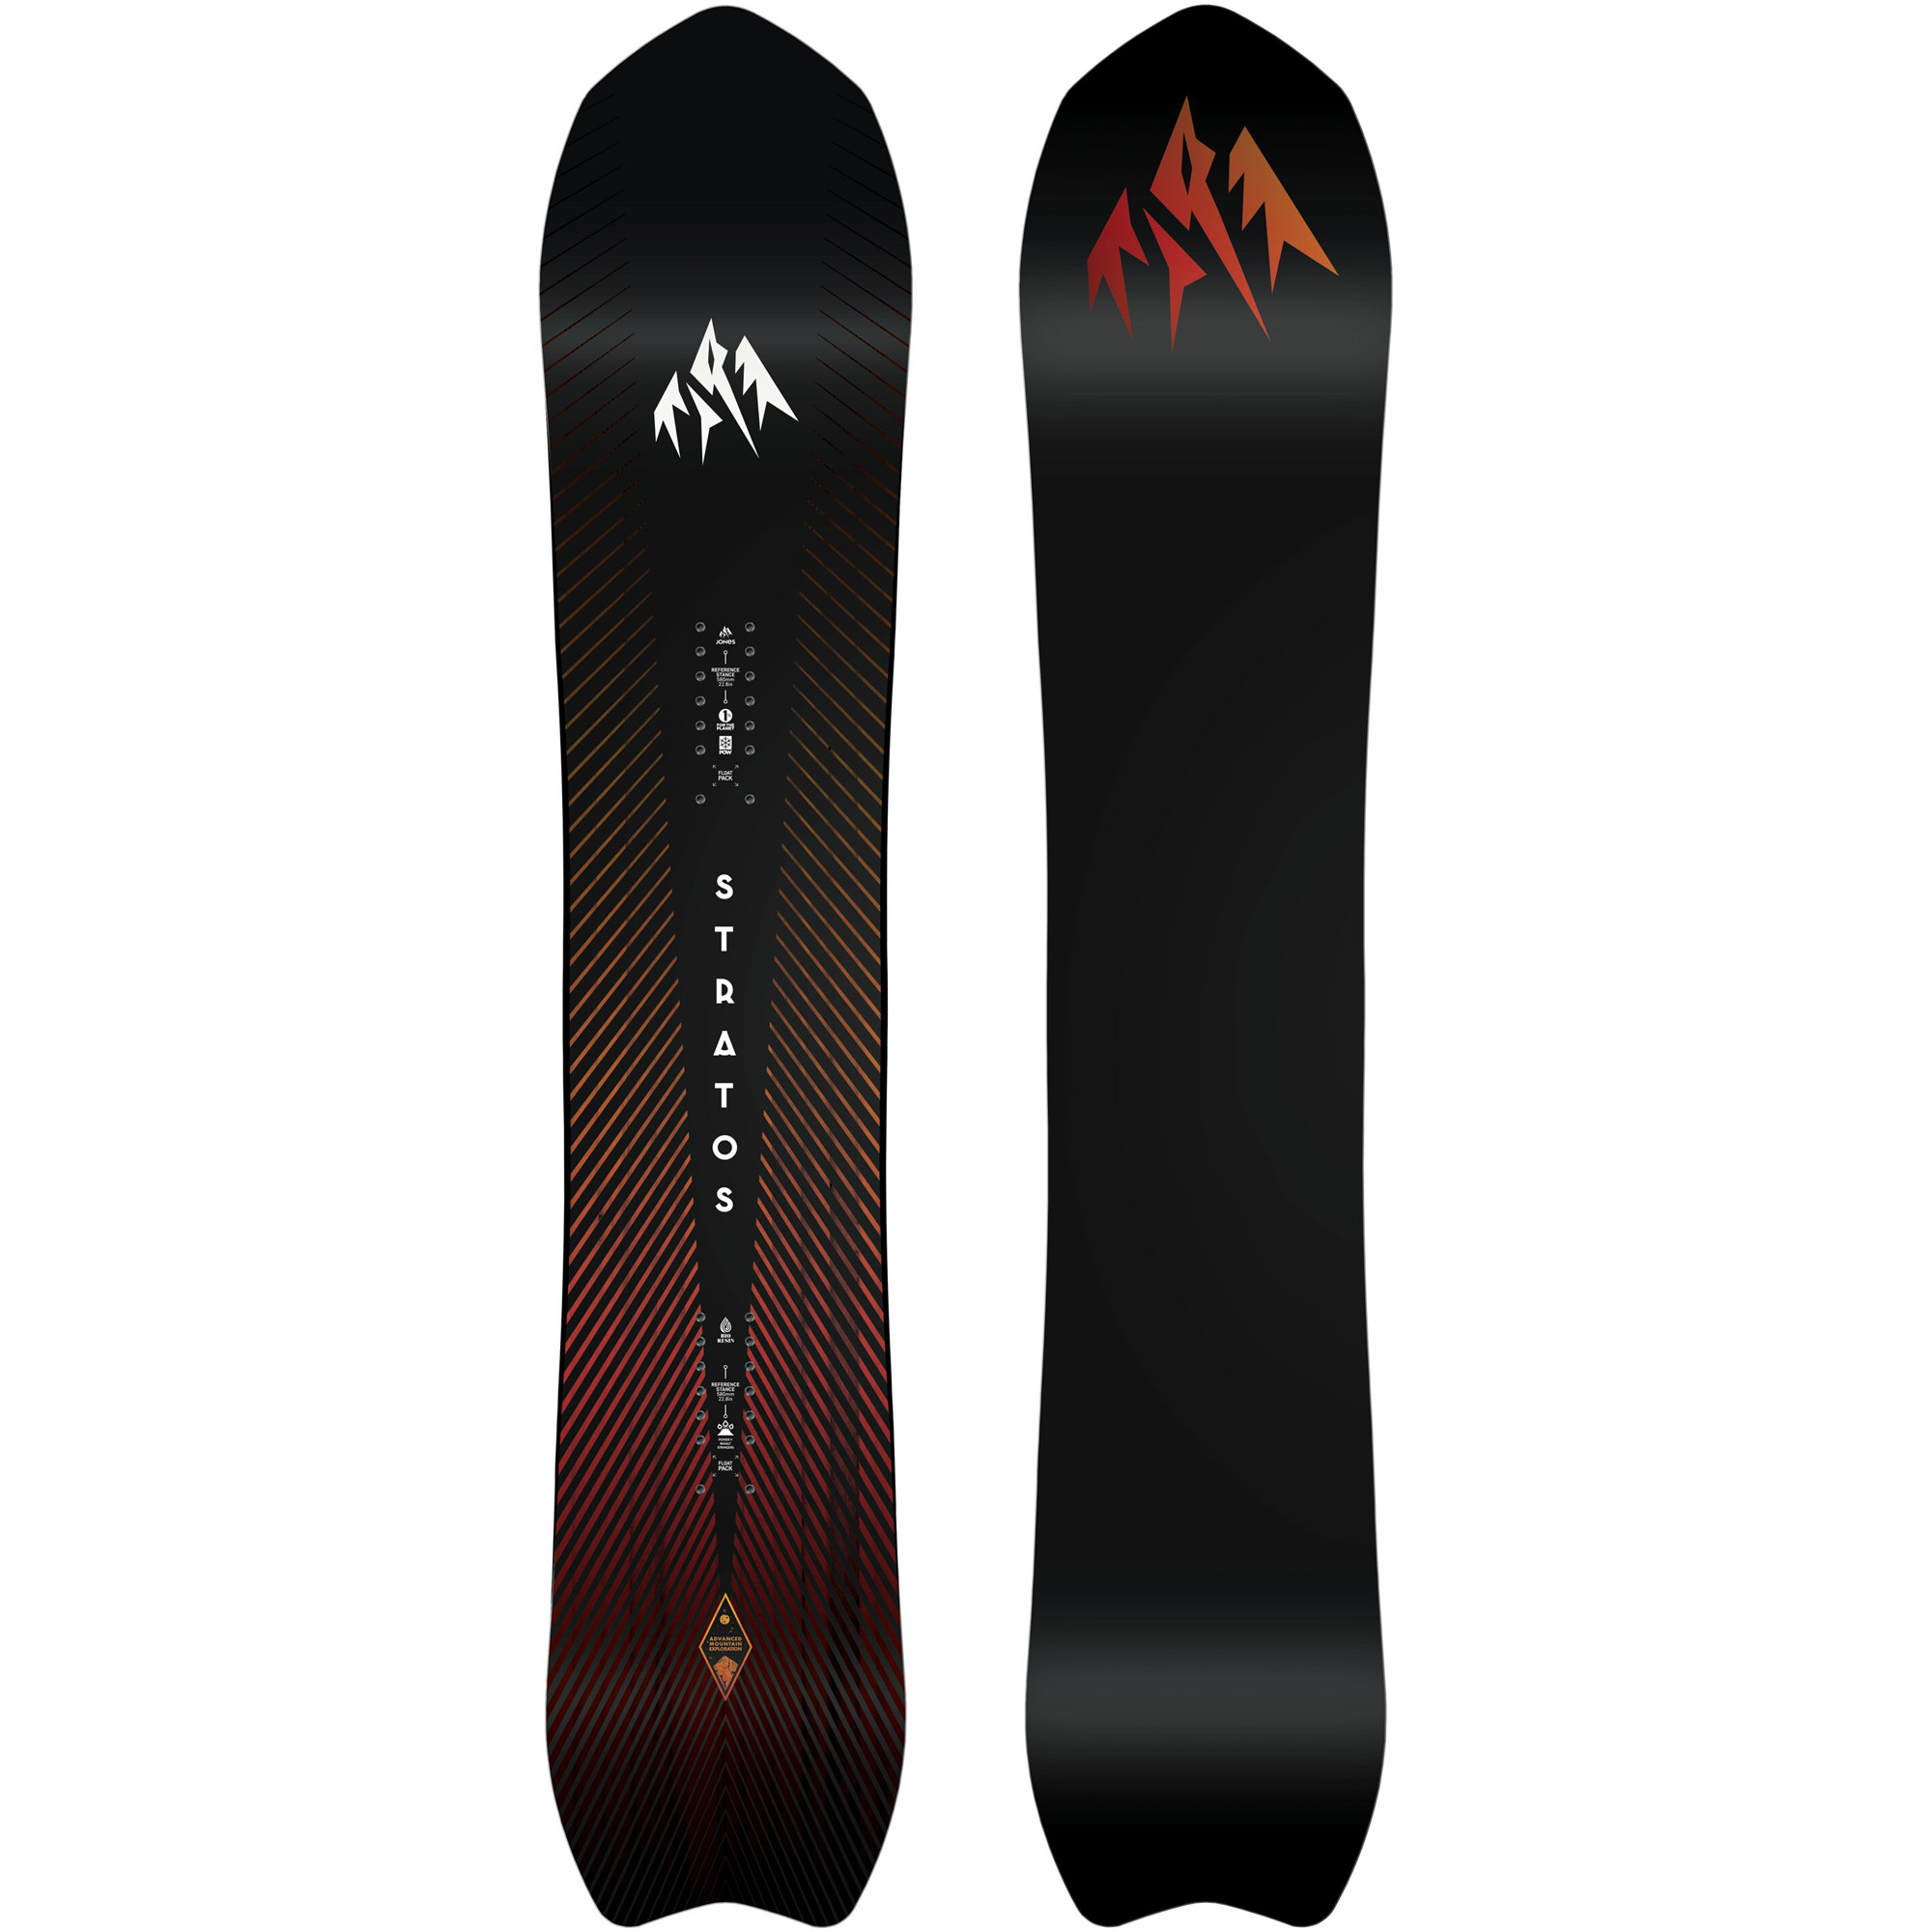 Jones Stratos All Mountain/Freeride Snowboard